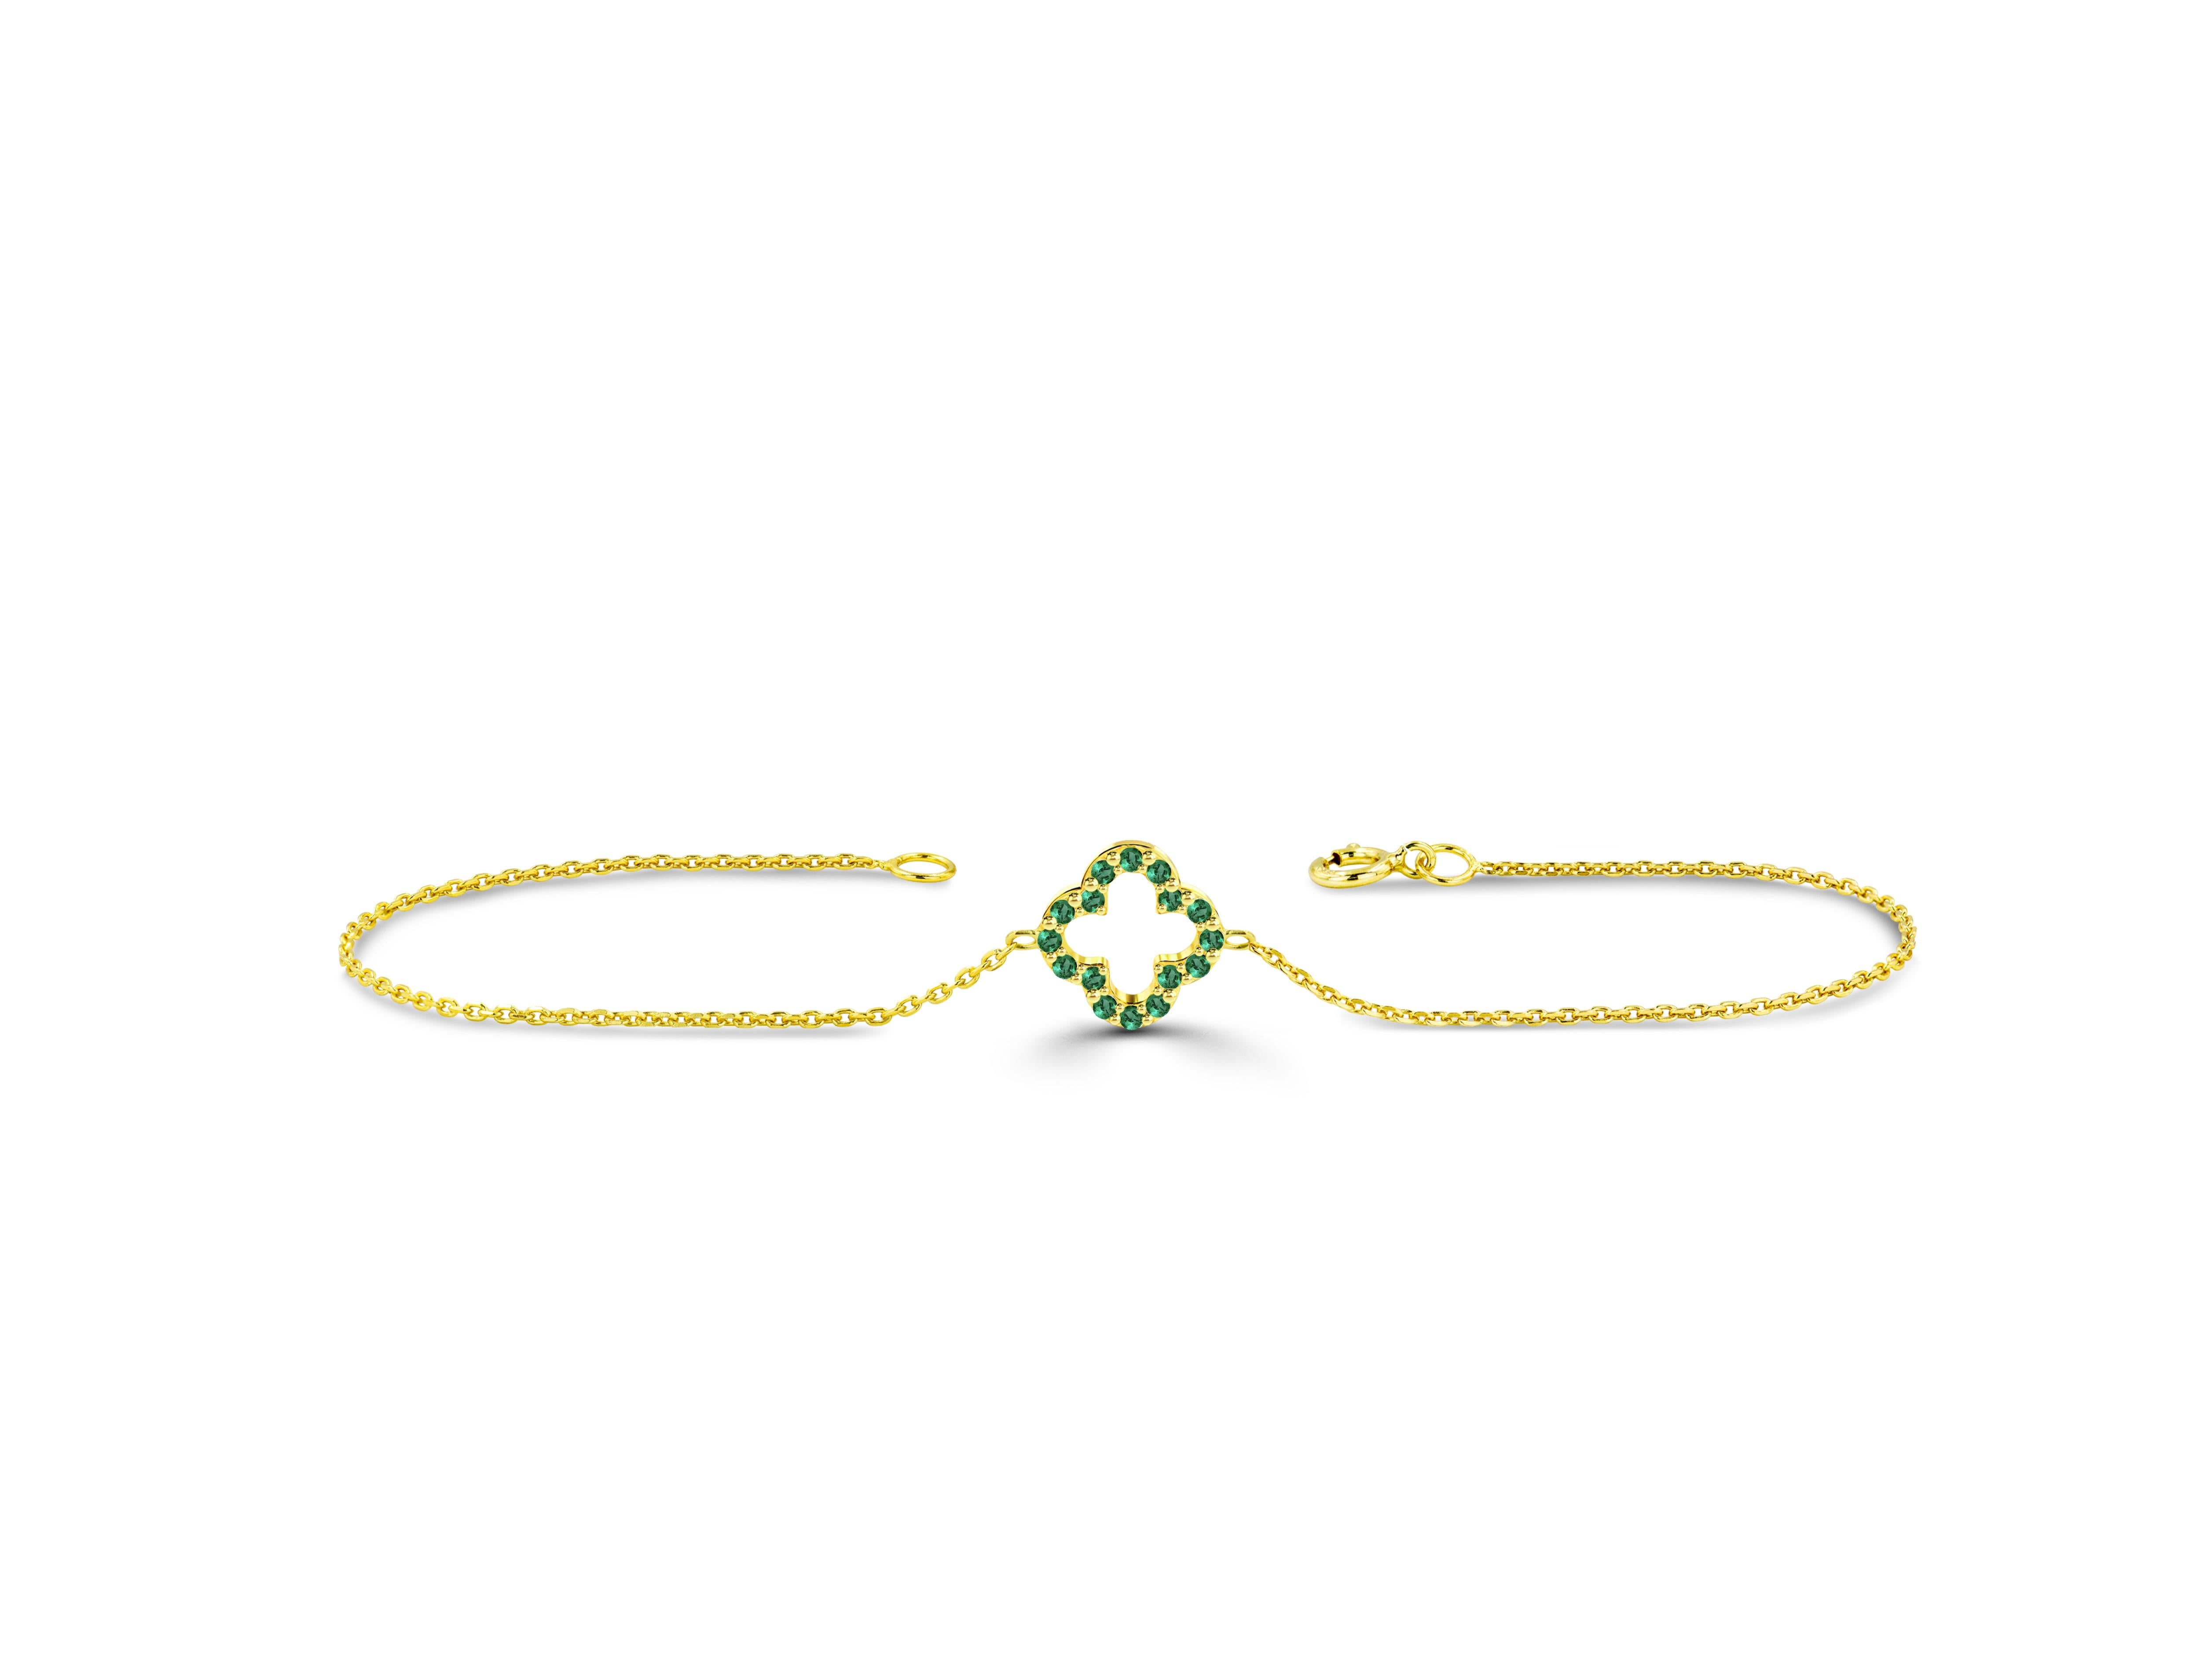 Mini clover bracelet in precious stones Emerald / Ruby / Sapphire / Lucky clover bracelet / Natural and authentic stones

18k gold clover, clover bracelet gold, precious stone clover, lucky leaf bracelet, emerald clover, ruby clover, sapphire